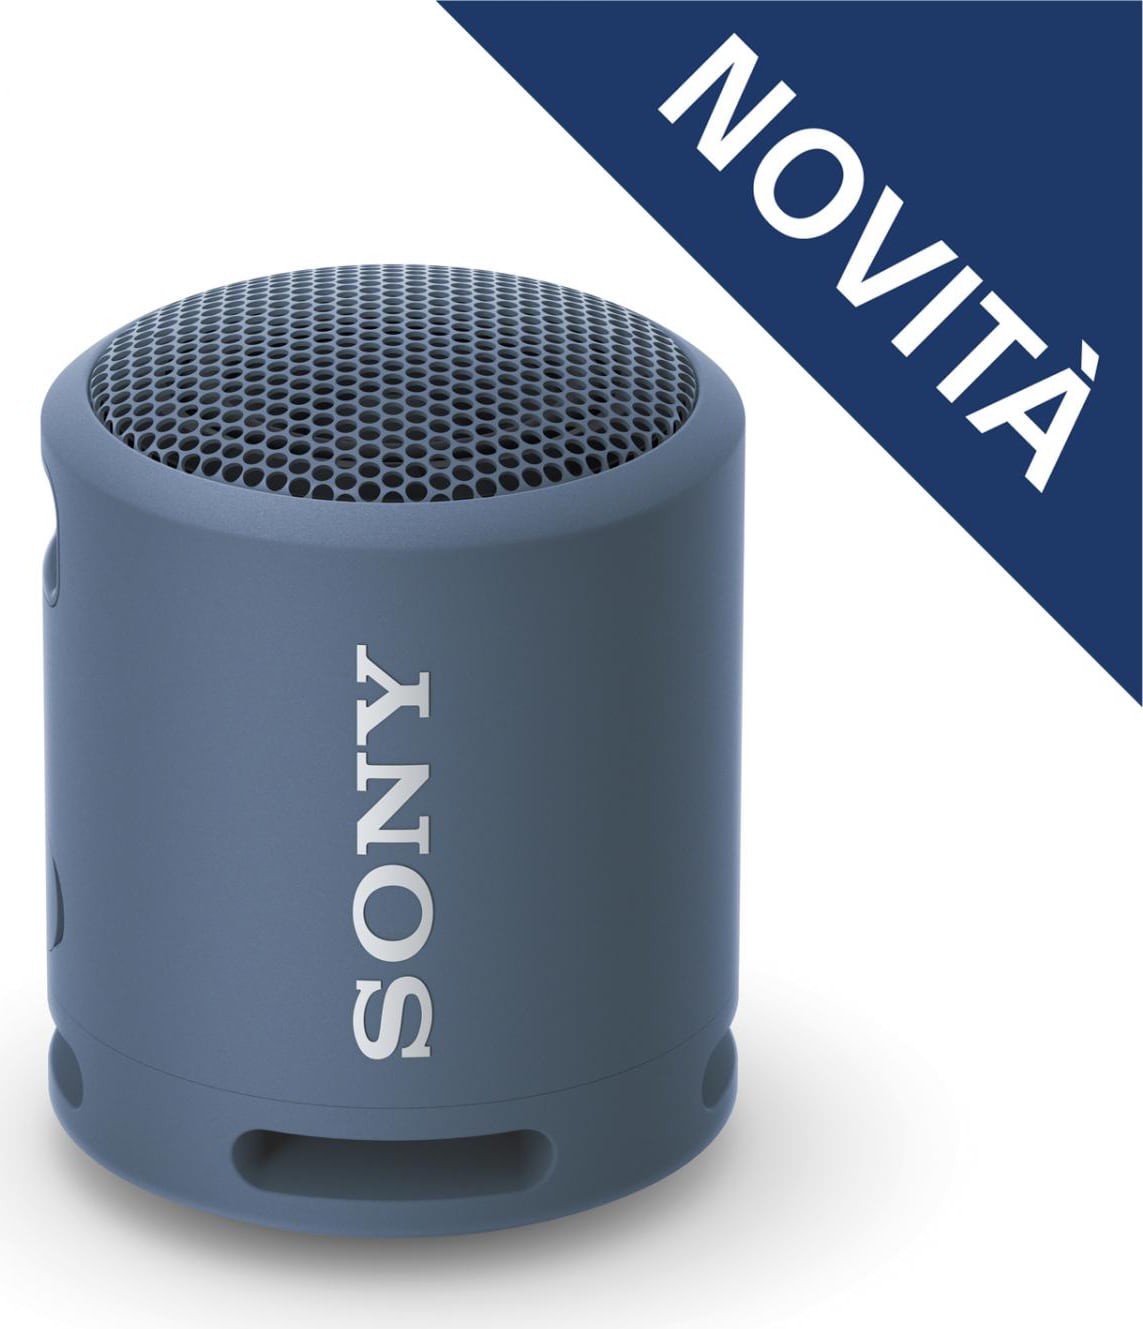 Sony SRSXB13L.CE7 Cassa Bluetooth Altoparlante Speaker Portatile 5 watt Blu